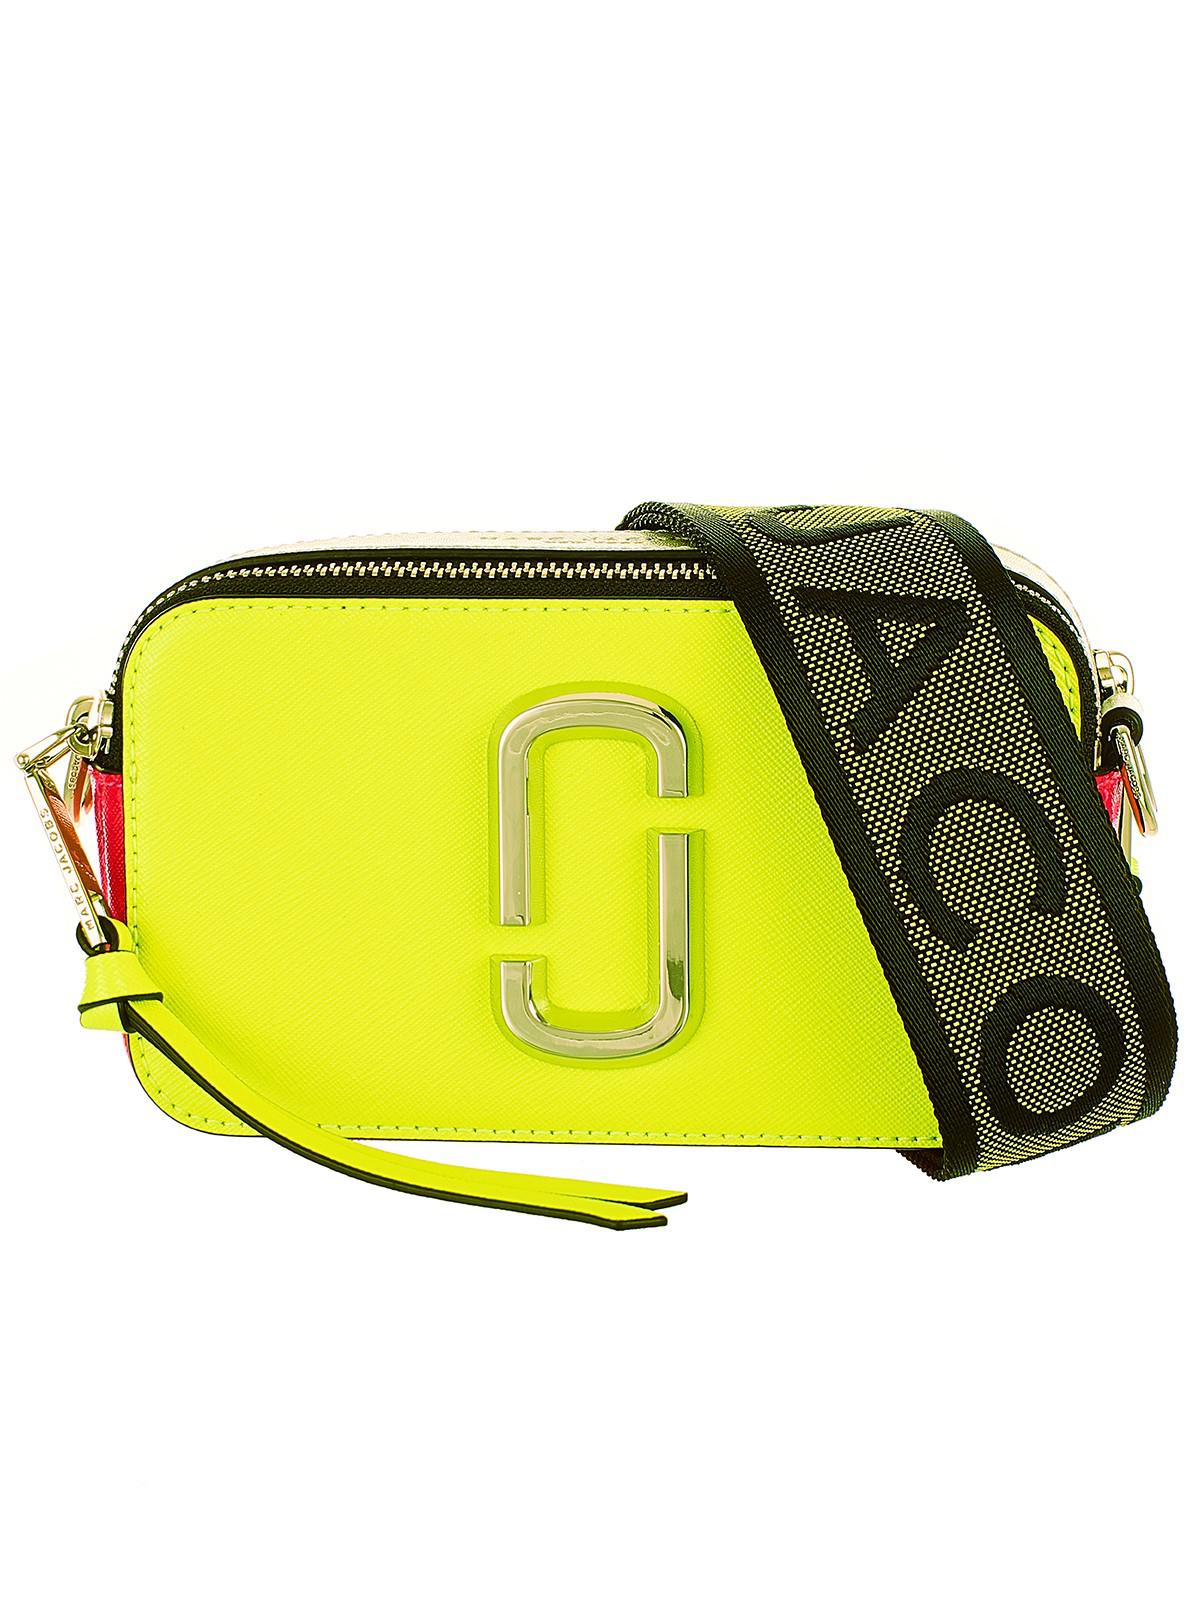 Marc Jacobs Neon Yellow Snapshot Bag - Lyst